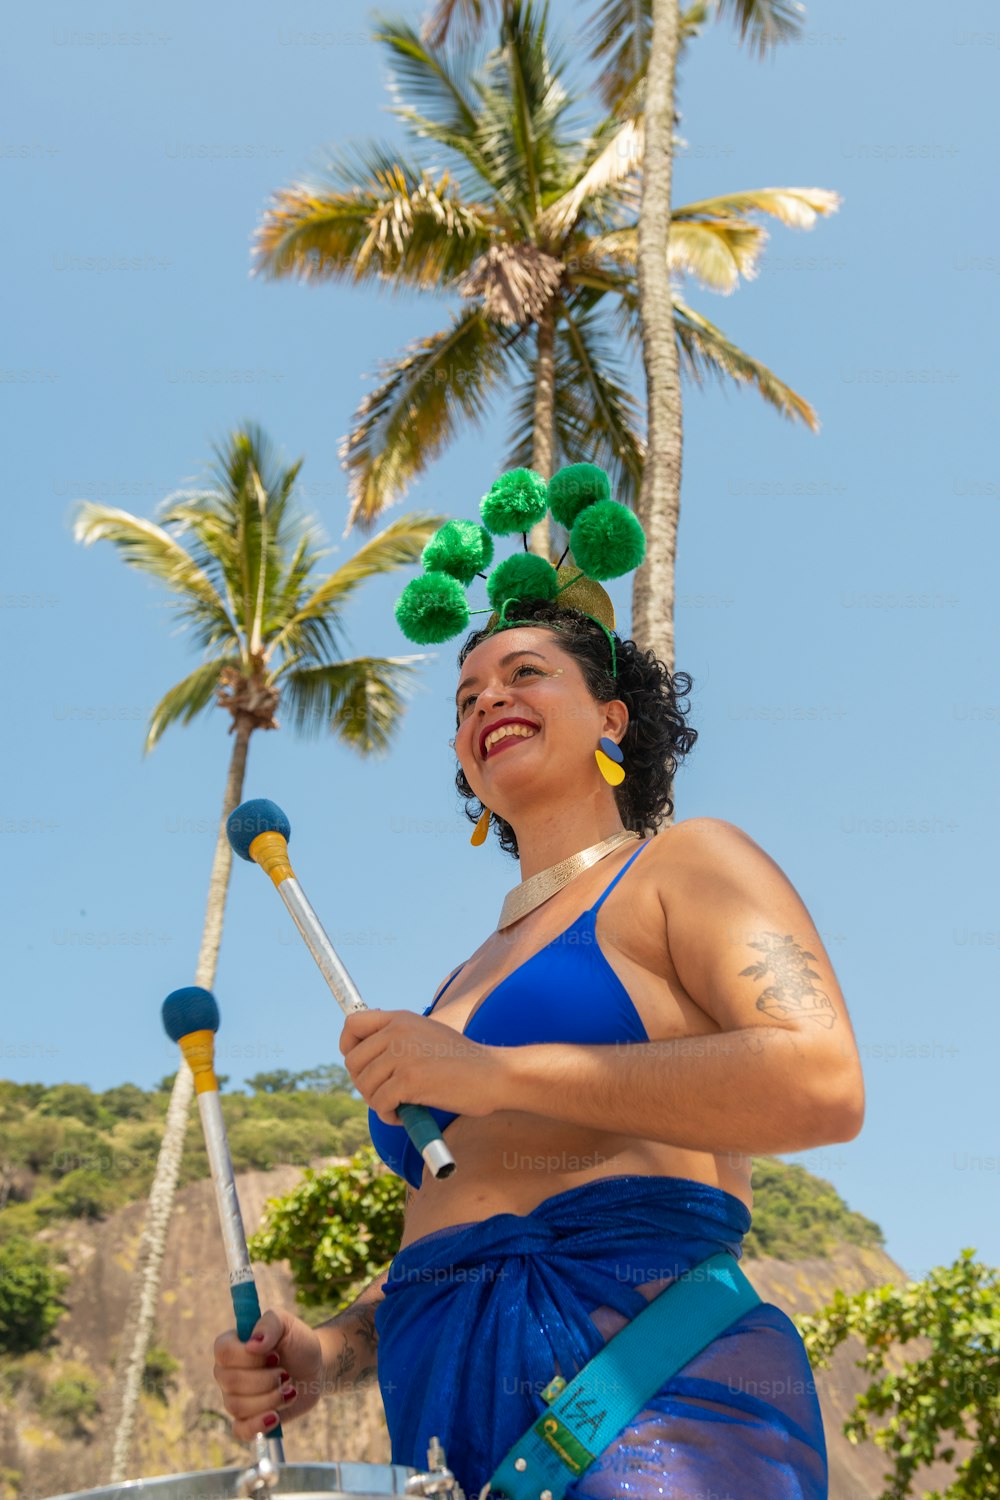 a woman in a blue bikini holding a pole